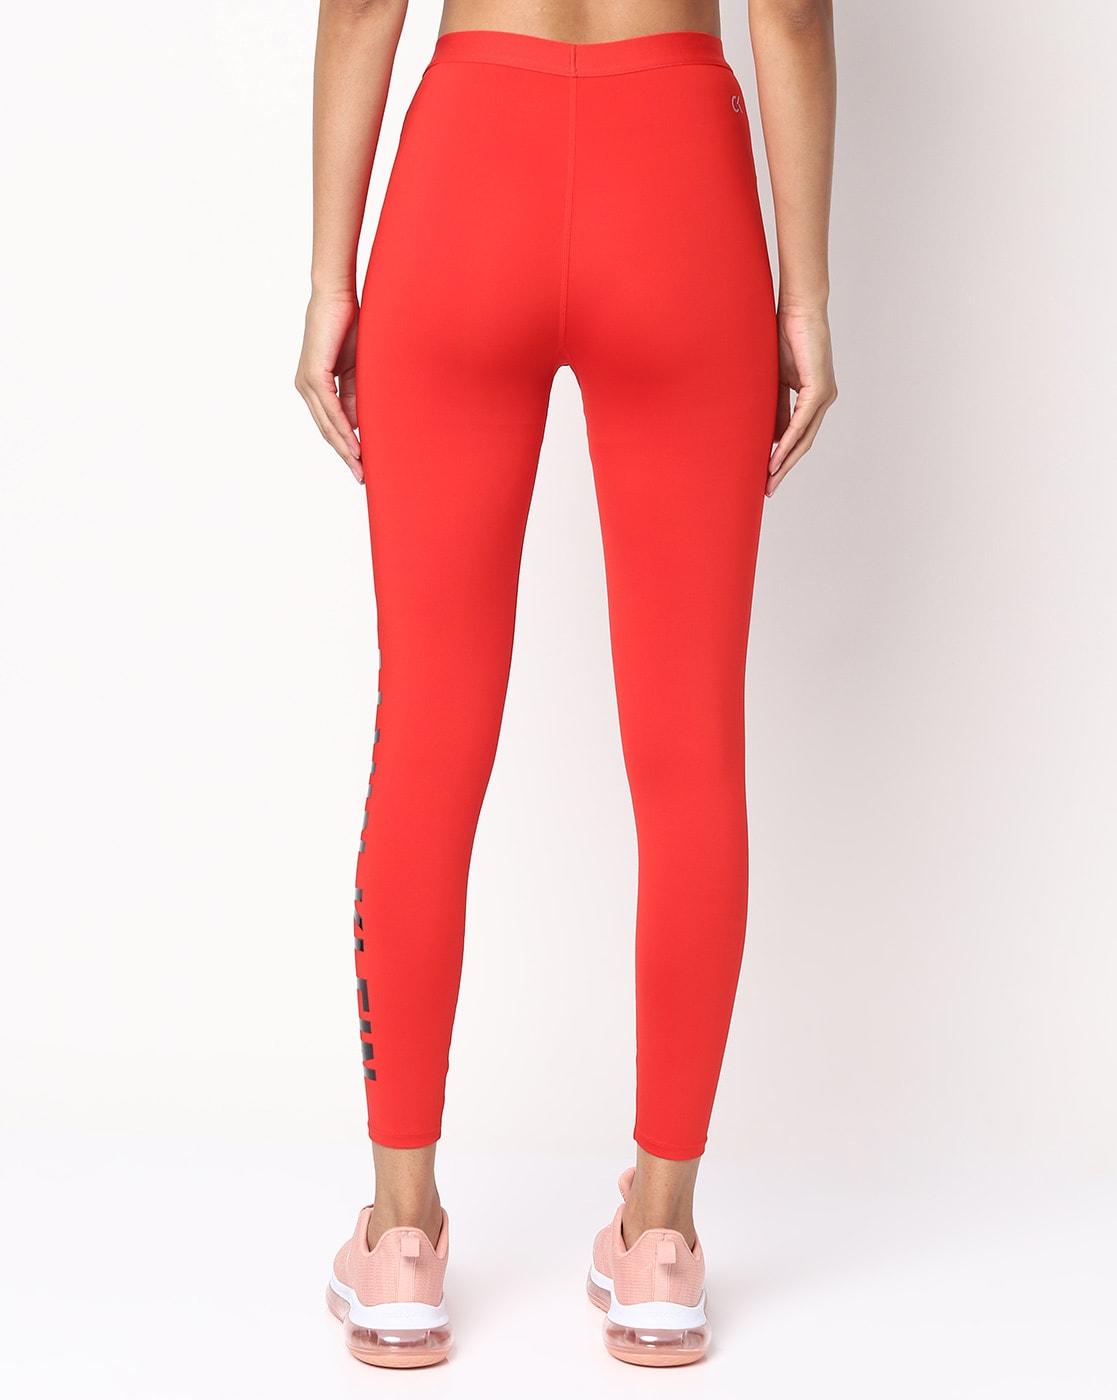 Buy Red Leggings for Women by Calvin Klein Jeans Online